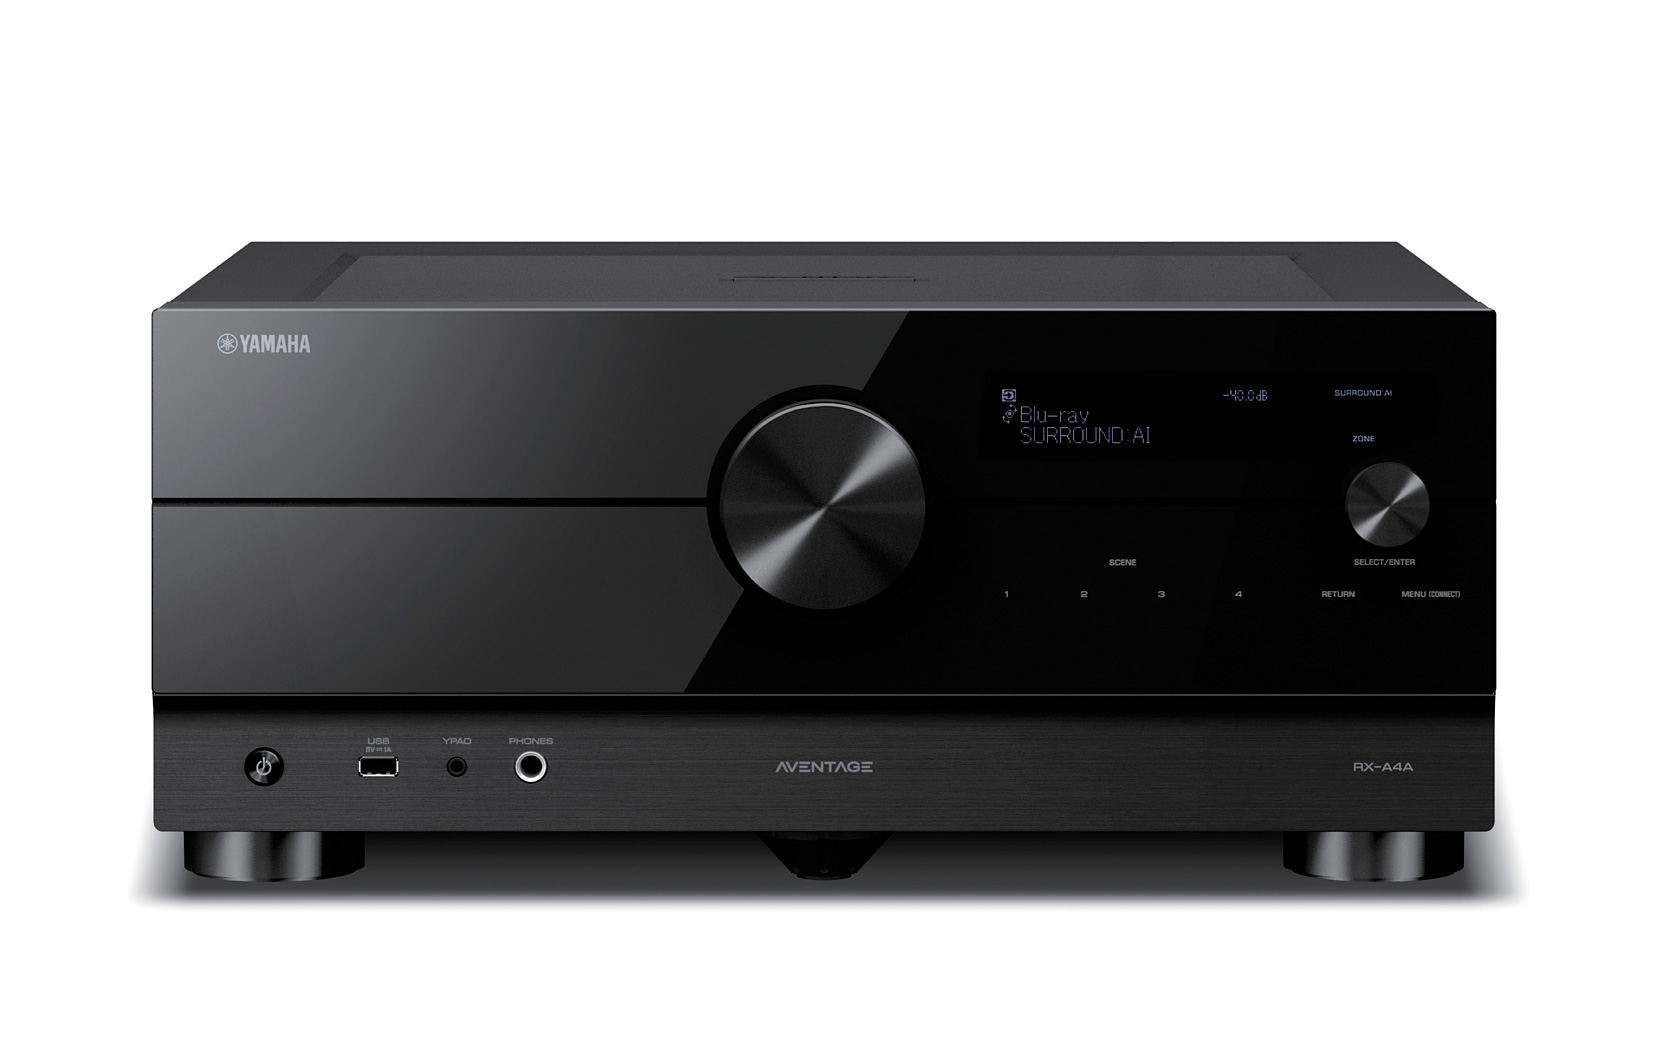 Yamaha announces new trio of Aventage AV receivers Home Cinema Choice